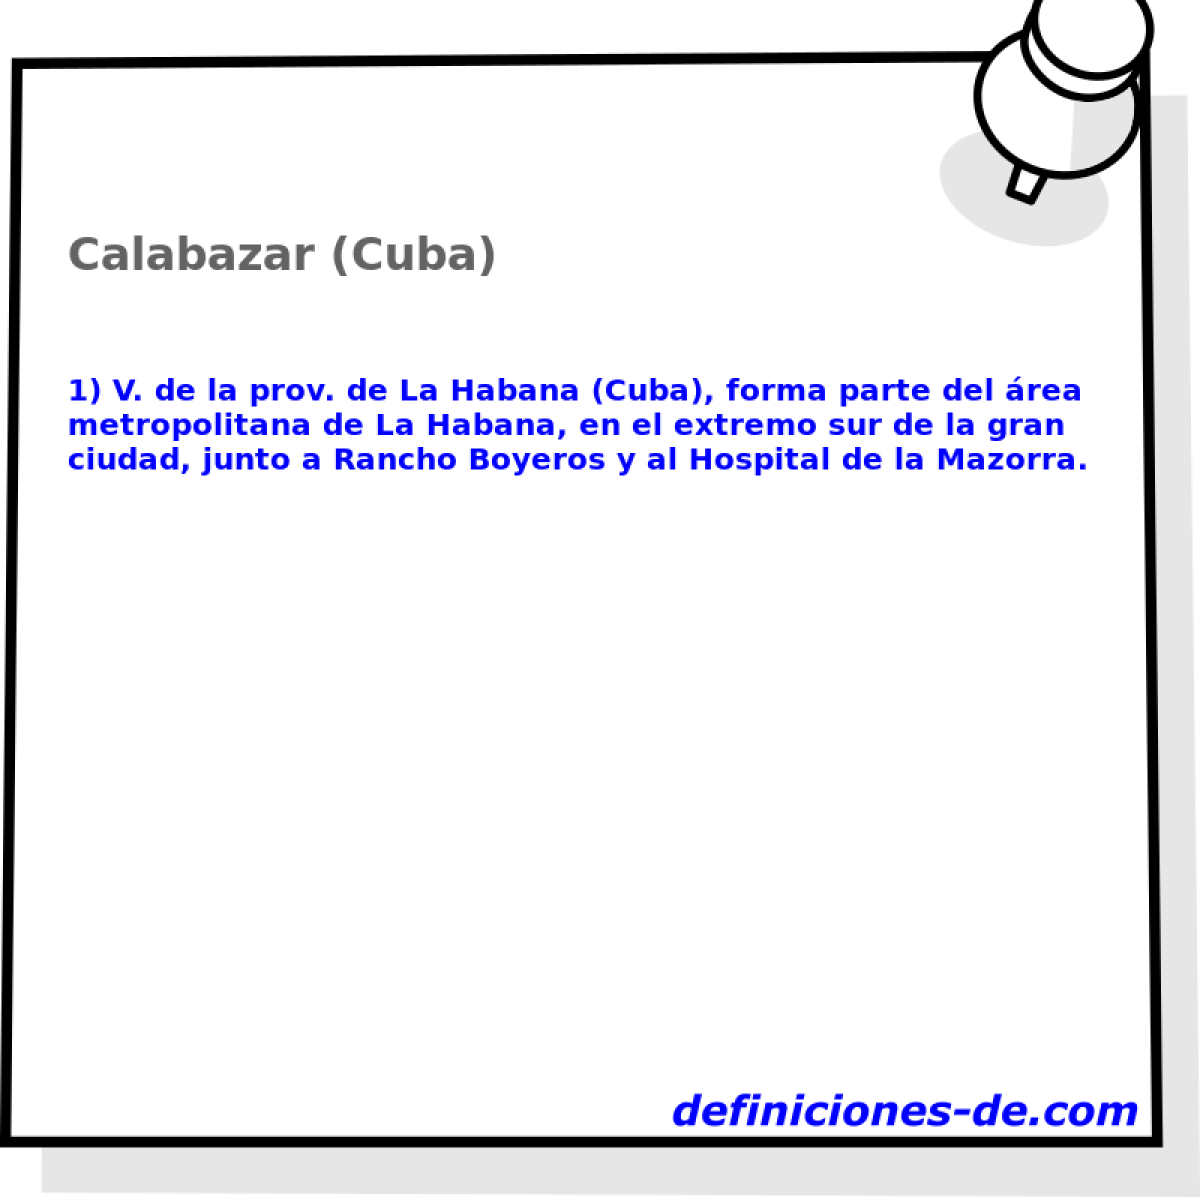 Calabazar (Cuba) 